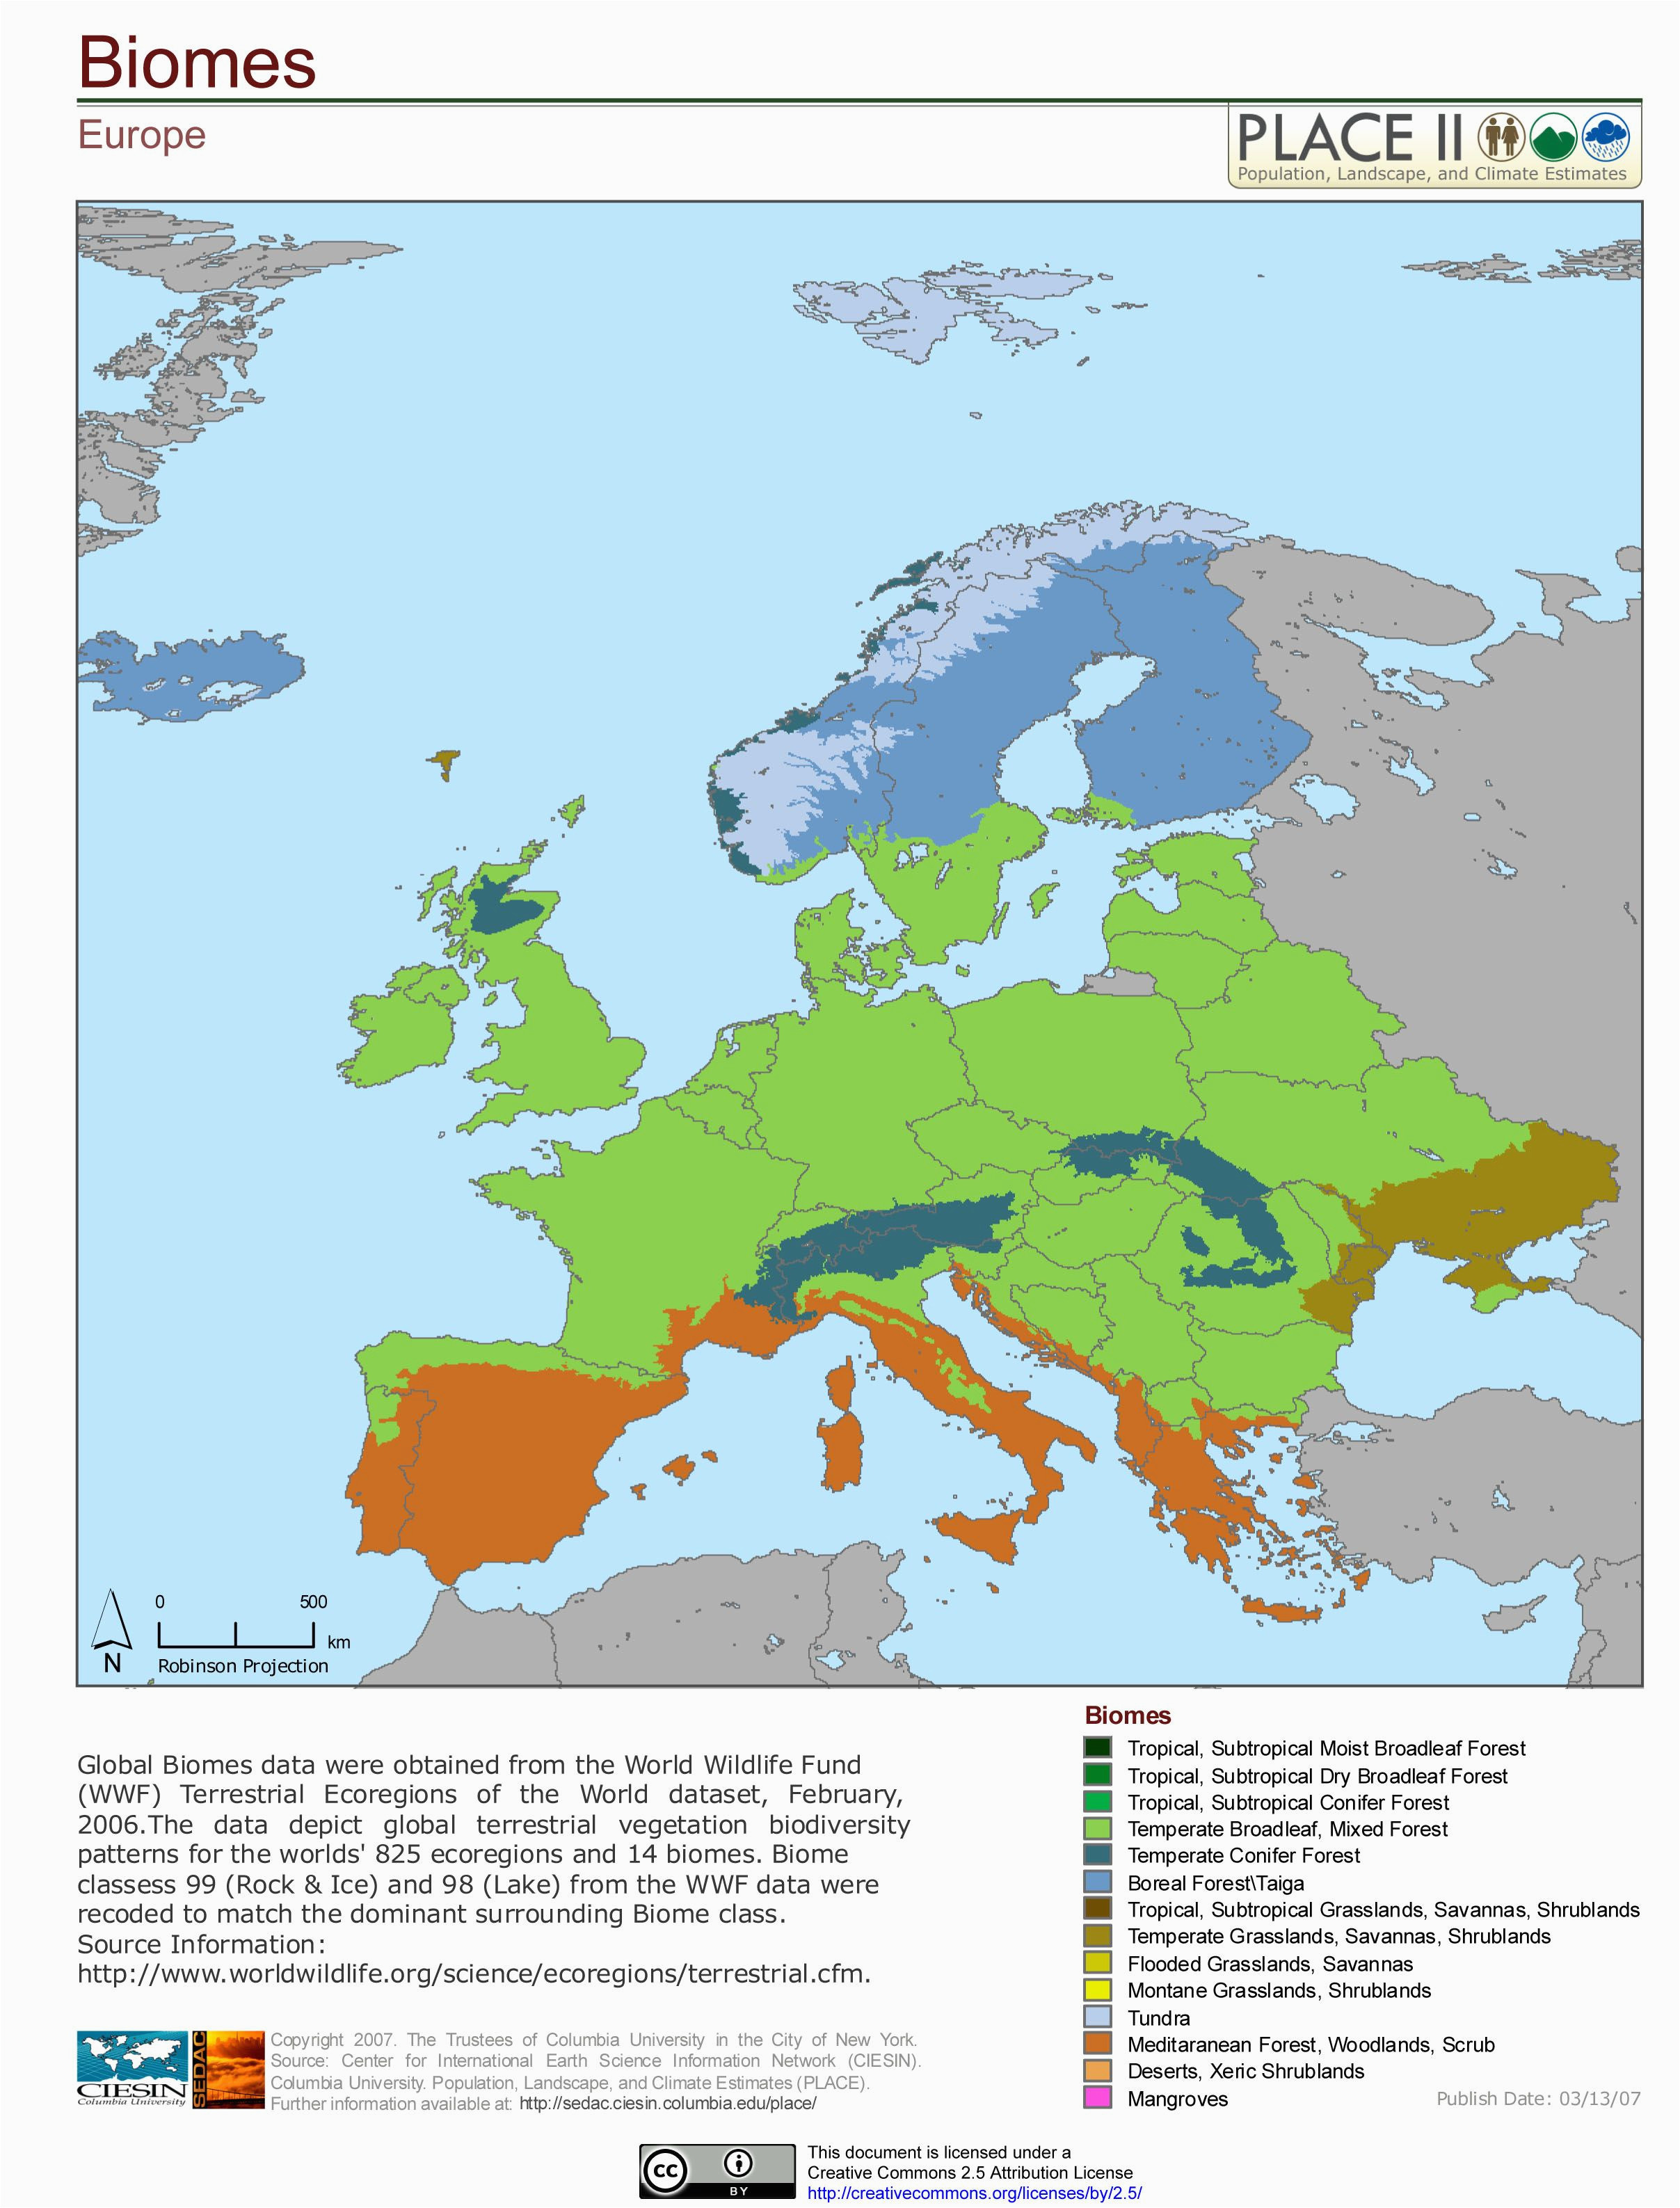 biomes of europe 2415 x 3174 europe biomes europe